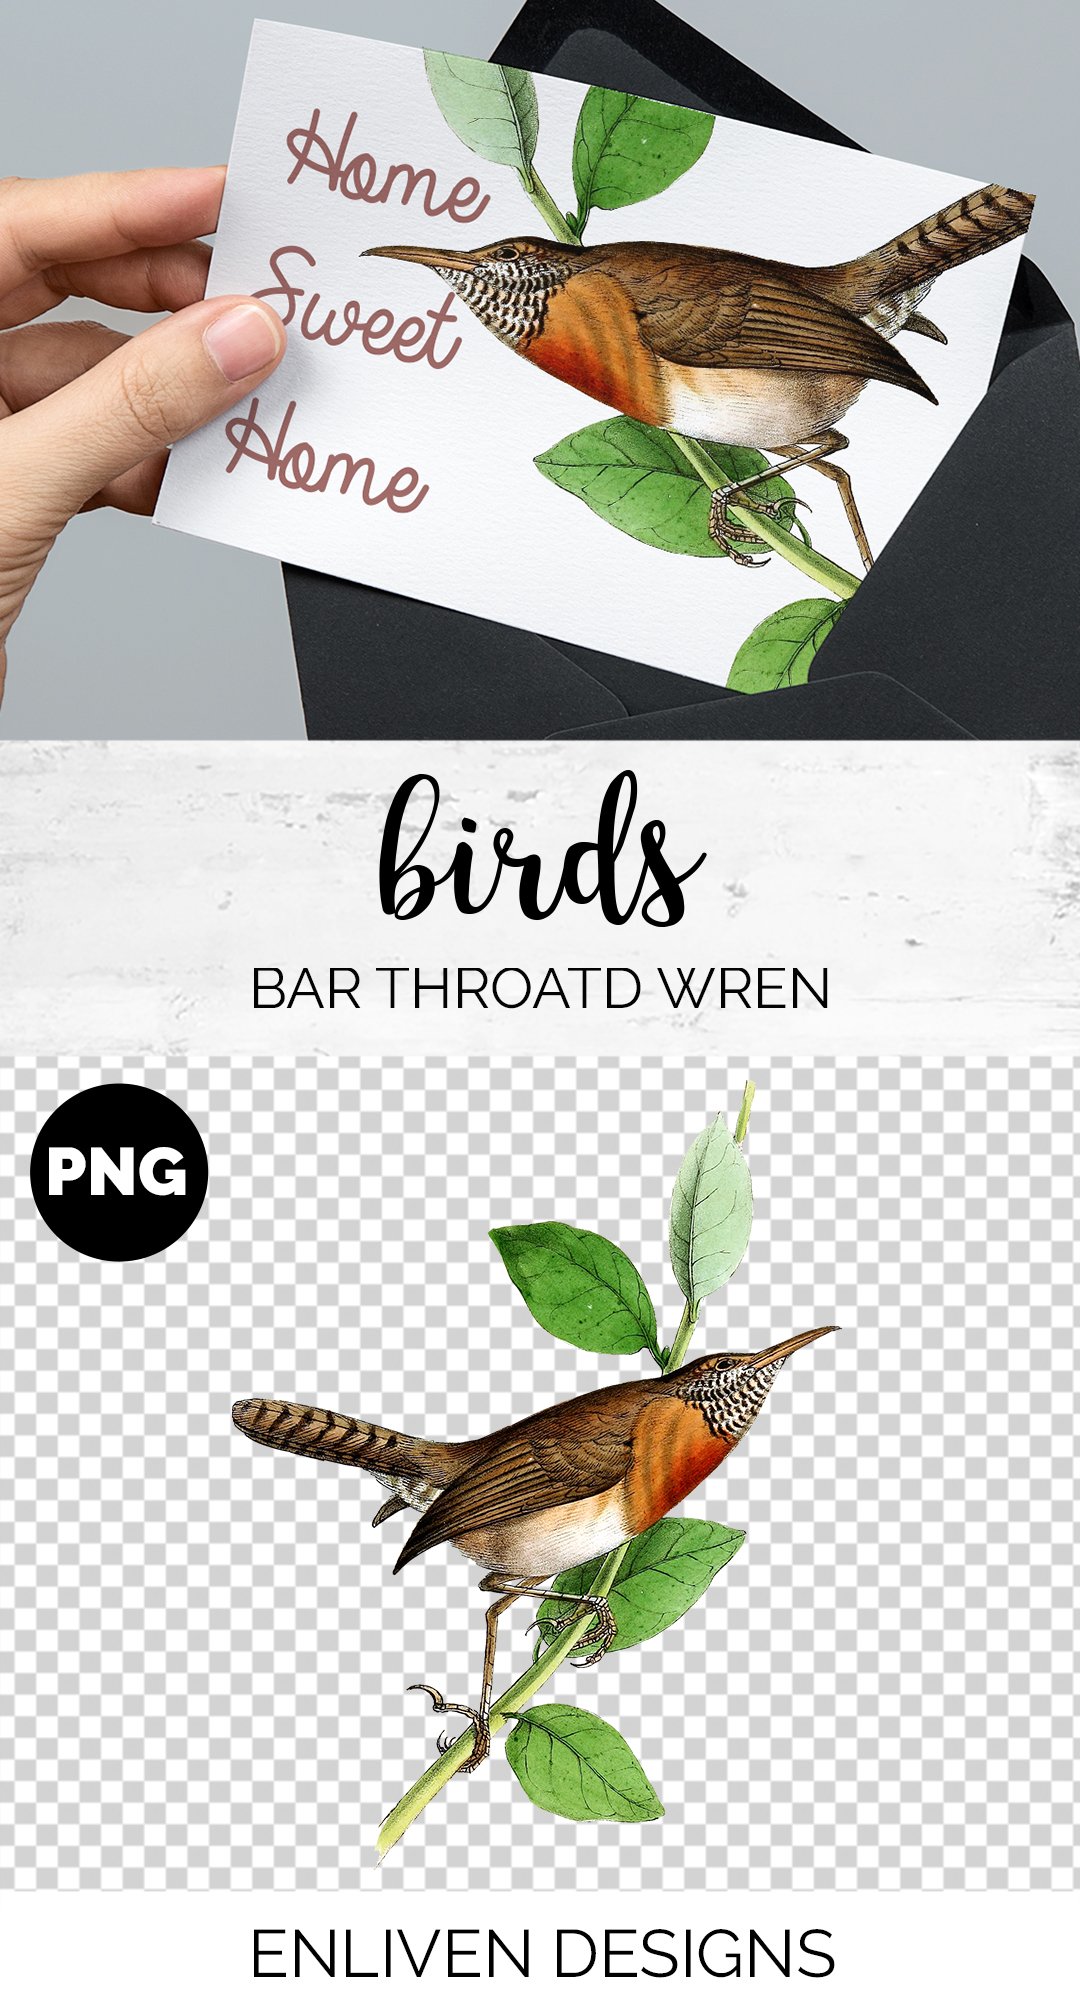 Wren Bar-throated Birds preview image.